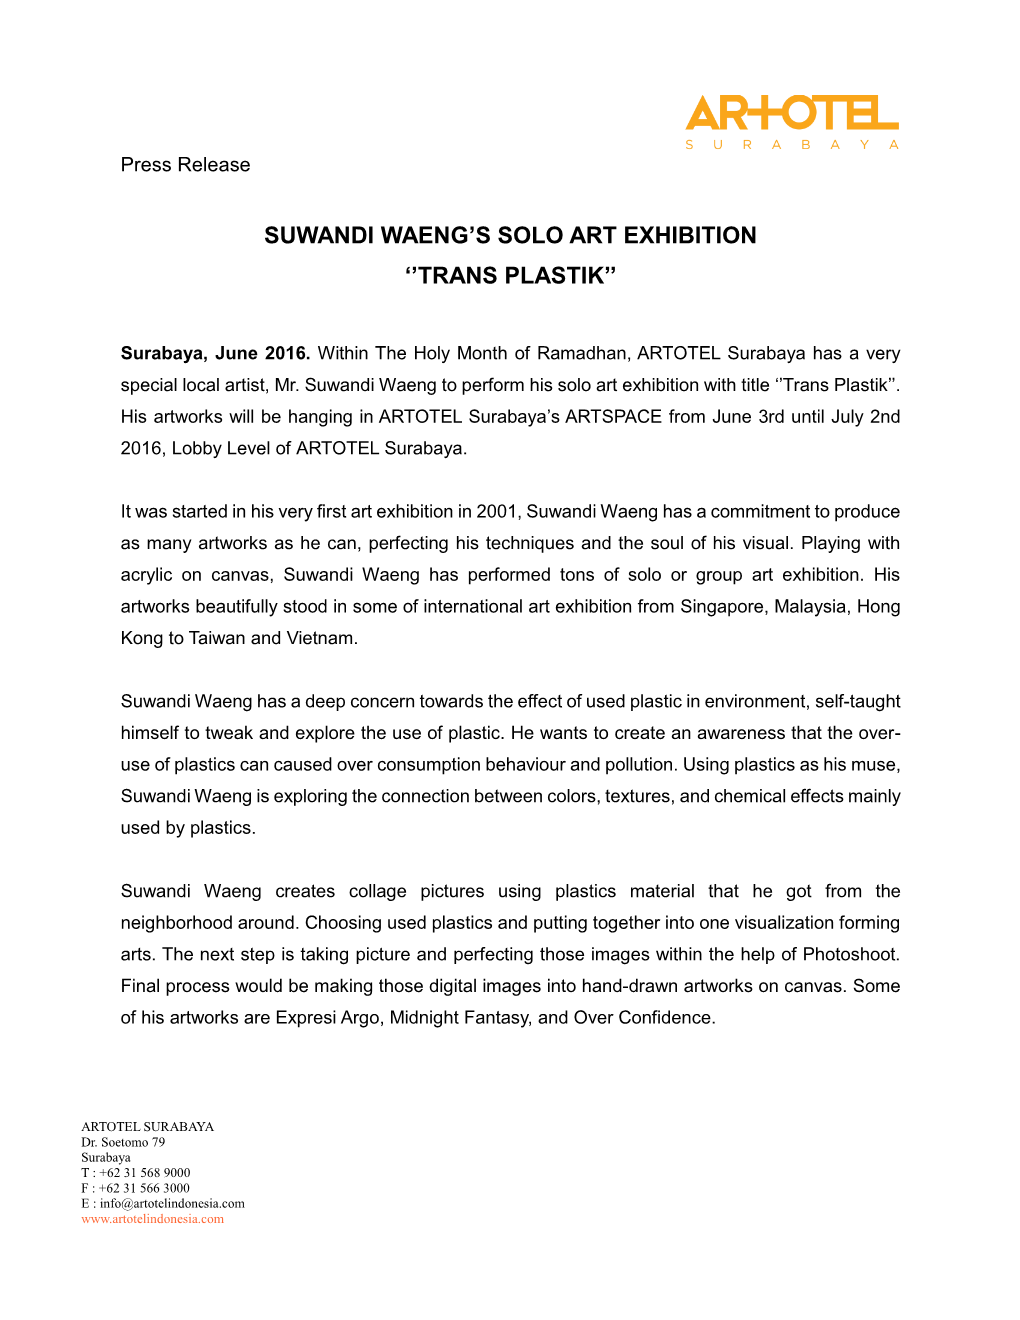 Suwandi Waeng's Solo Art Exhibition ''Trans Plastik''